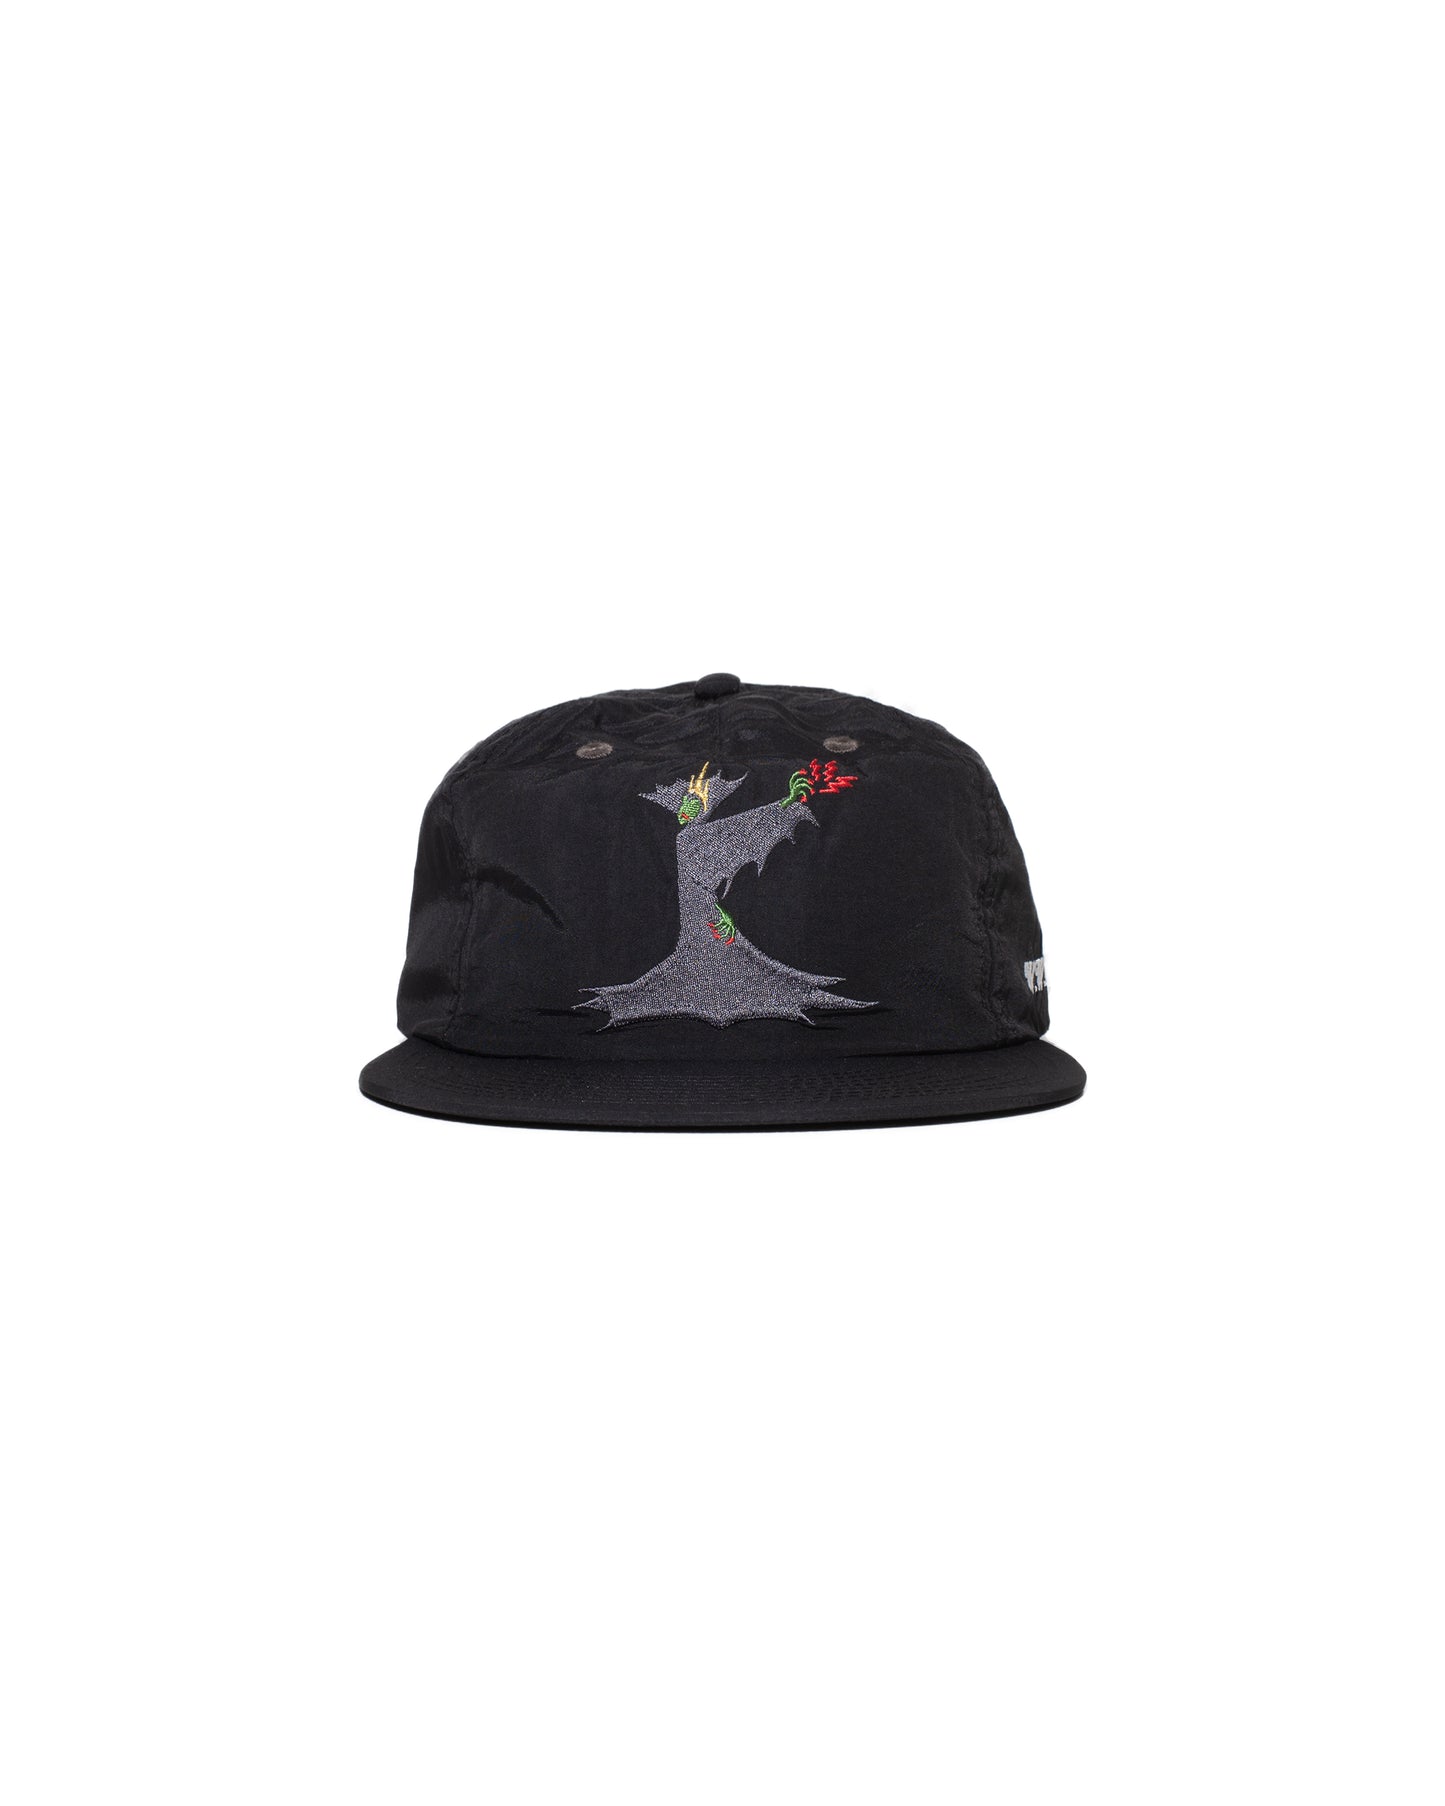 MALEFICENT HAT [BLACK]